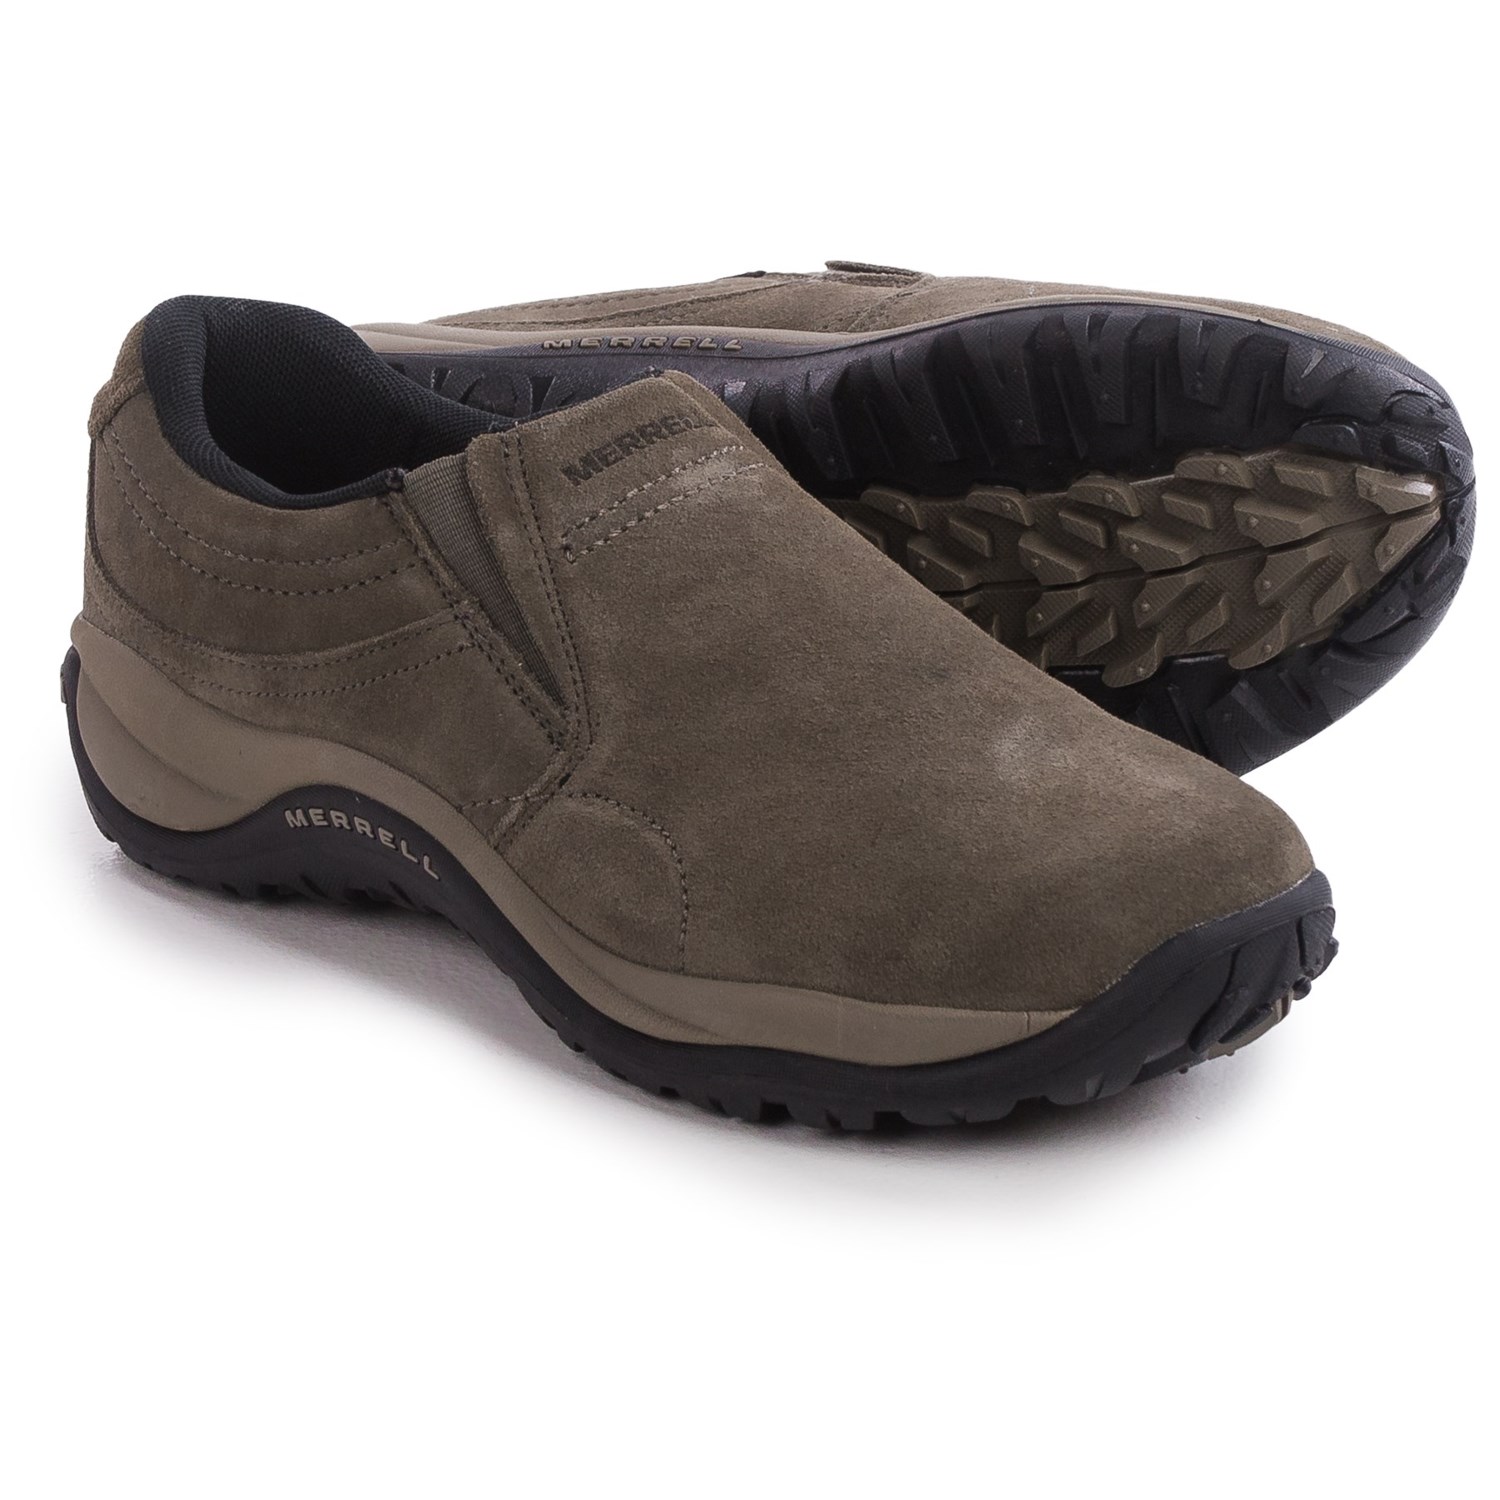 Merrell Reflex Coast Moc Shoes (For Men) - Save 33%